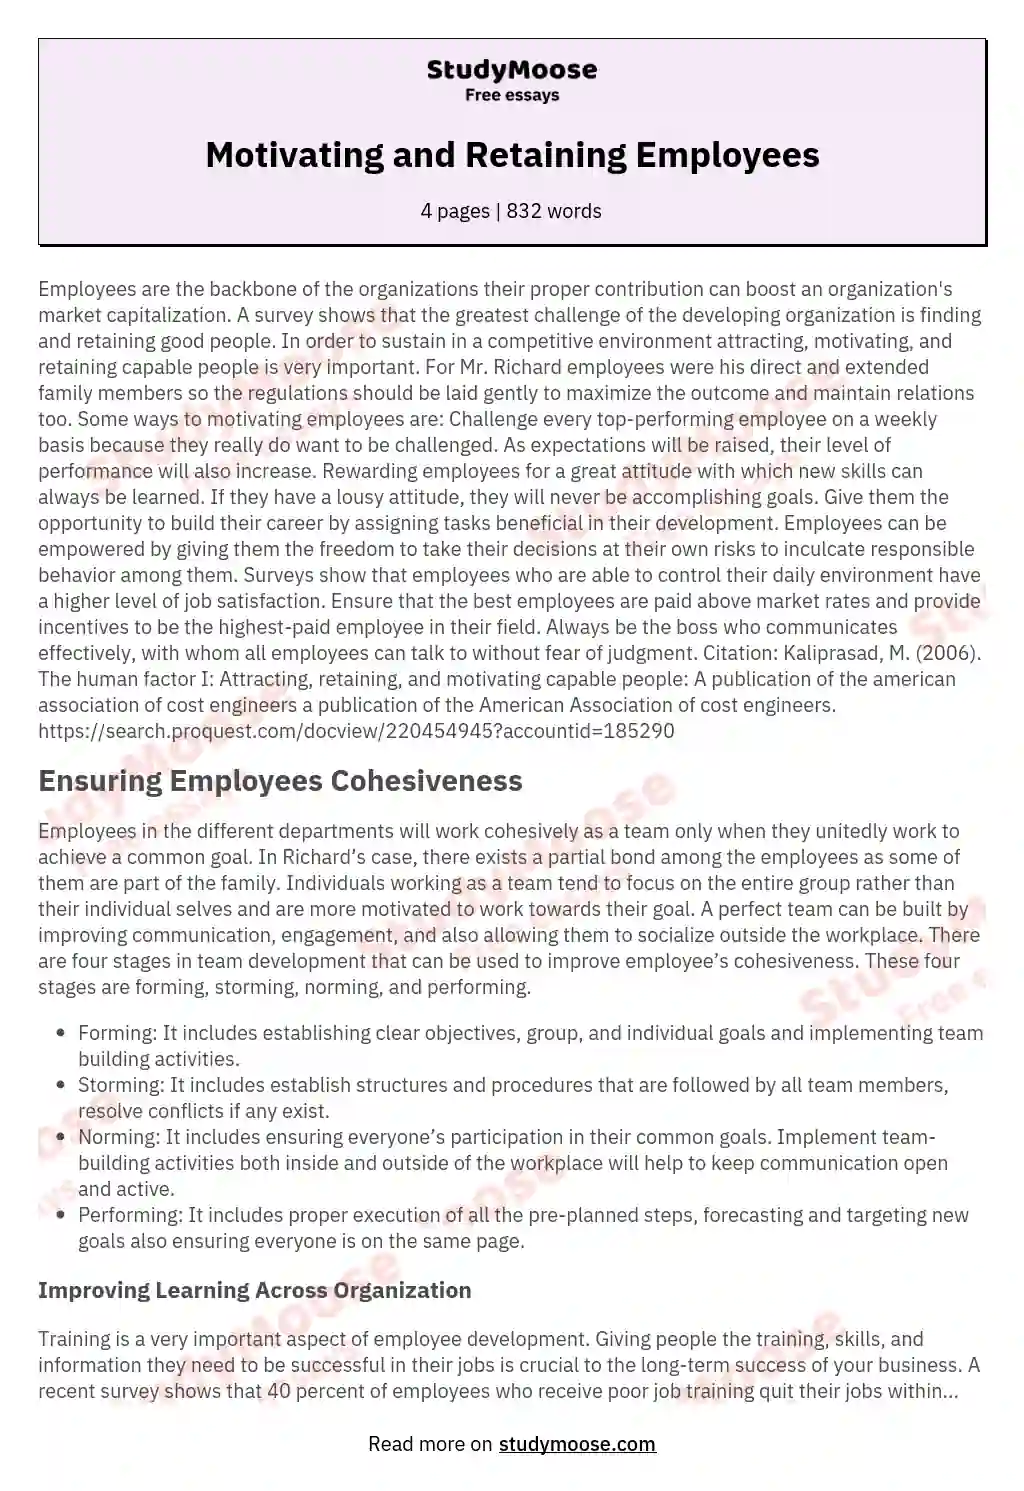 Motivating and Retaining Employees essay